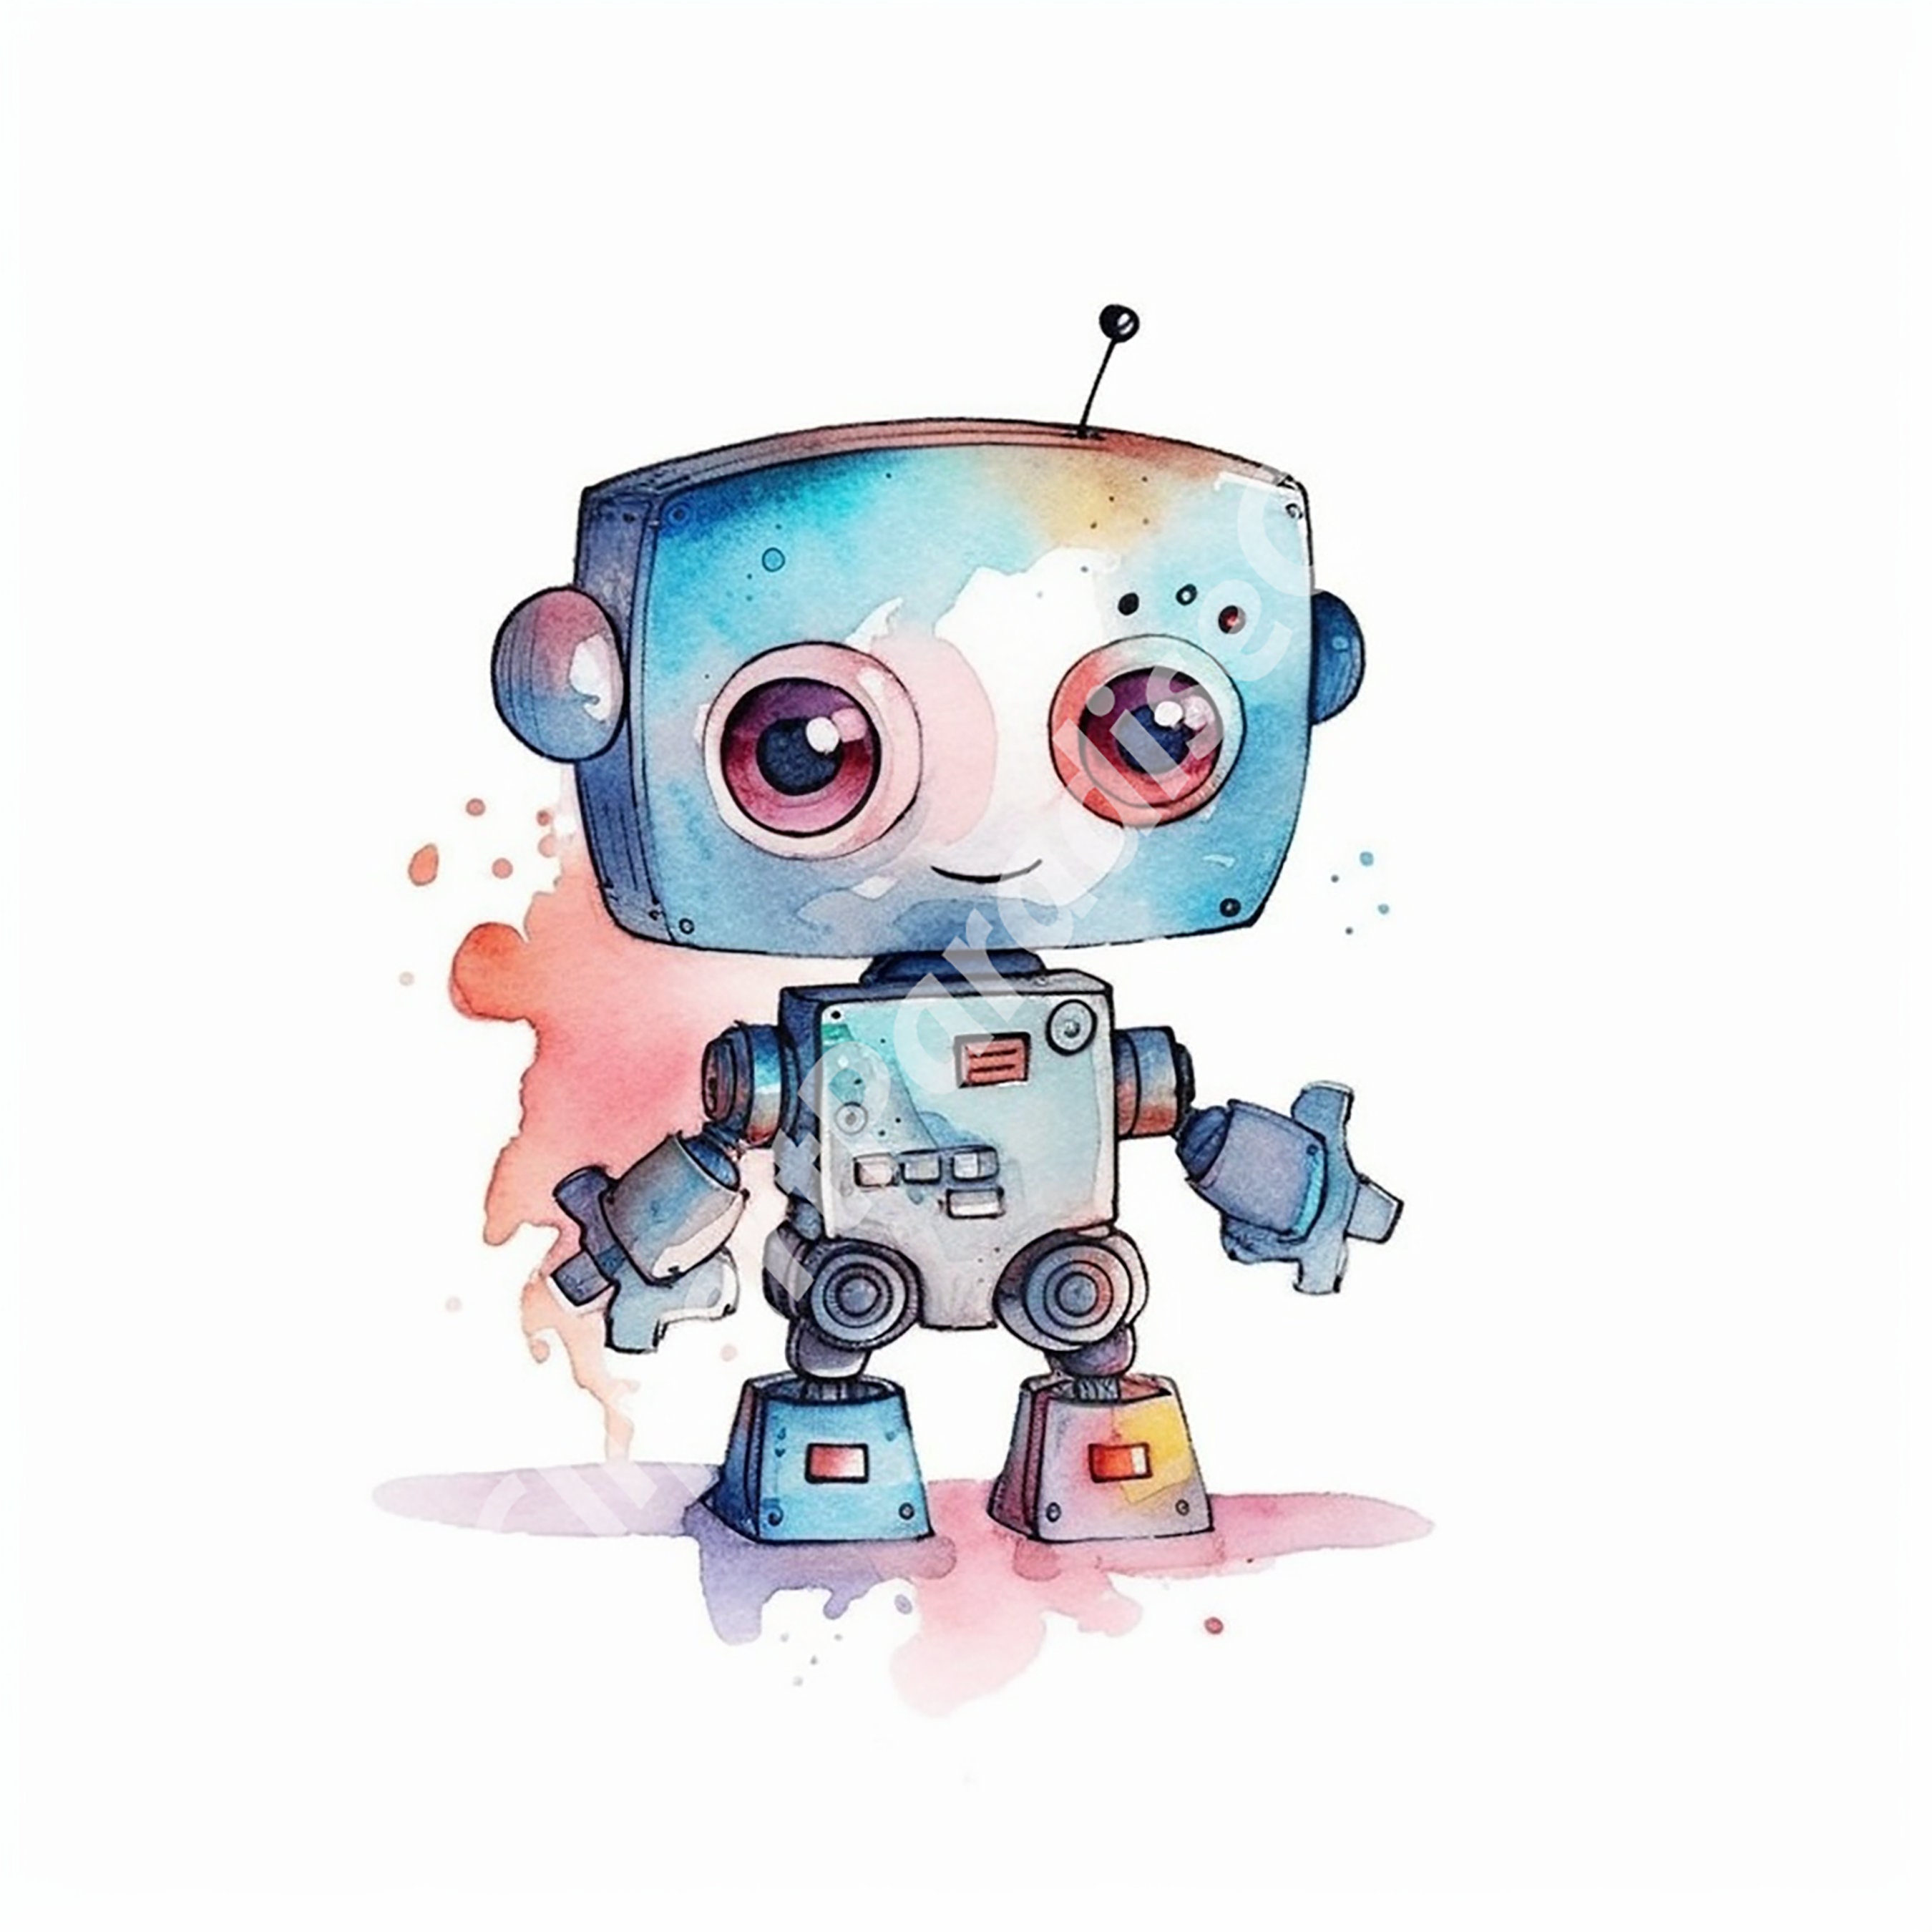 9 Cute Robot Clipart Collection Clipart Image, Cartoon Robot Design for ...